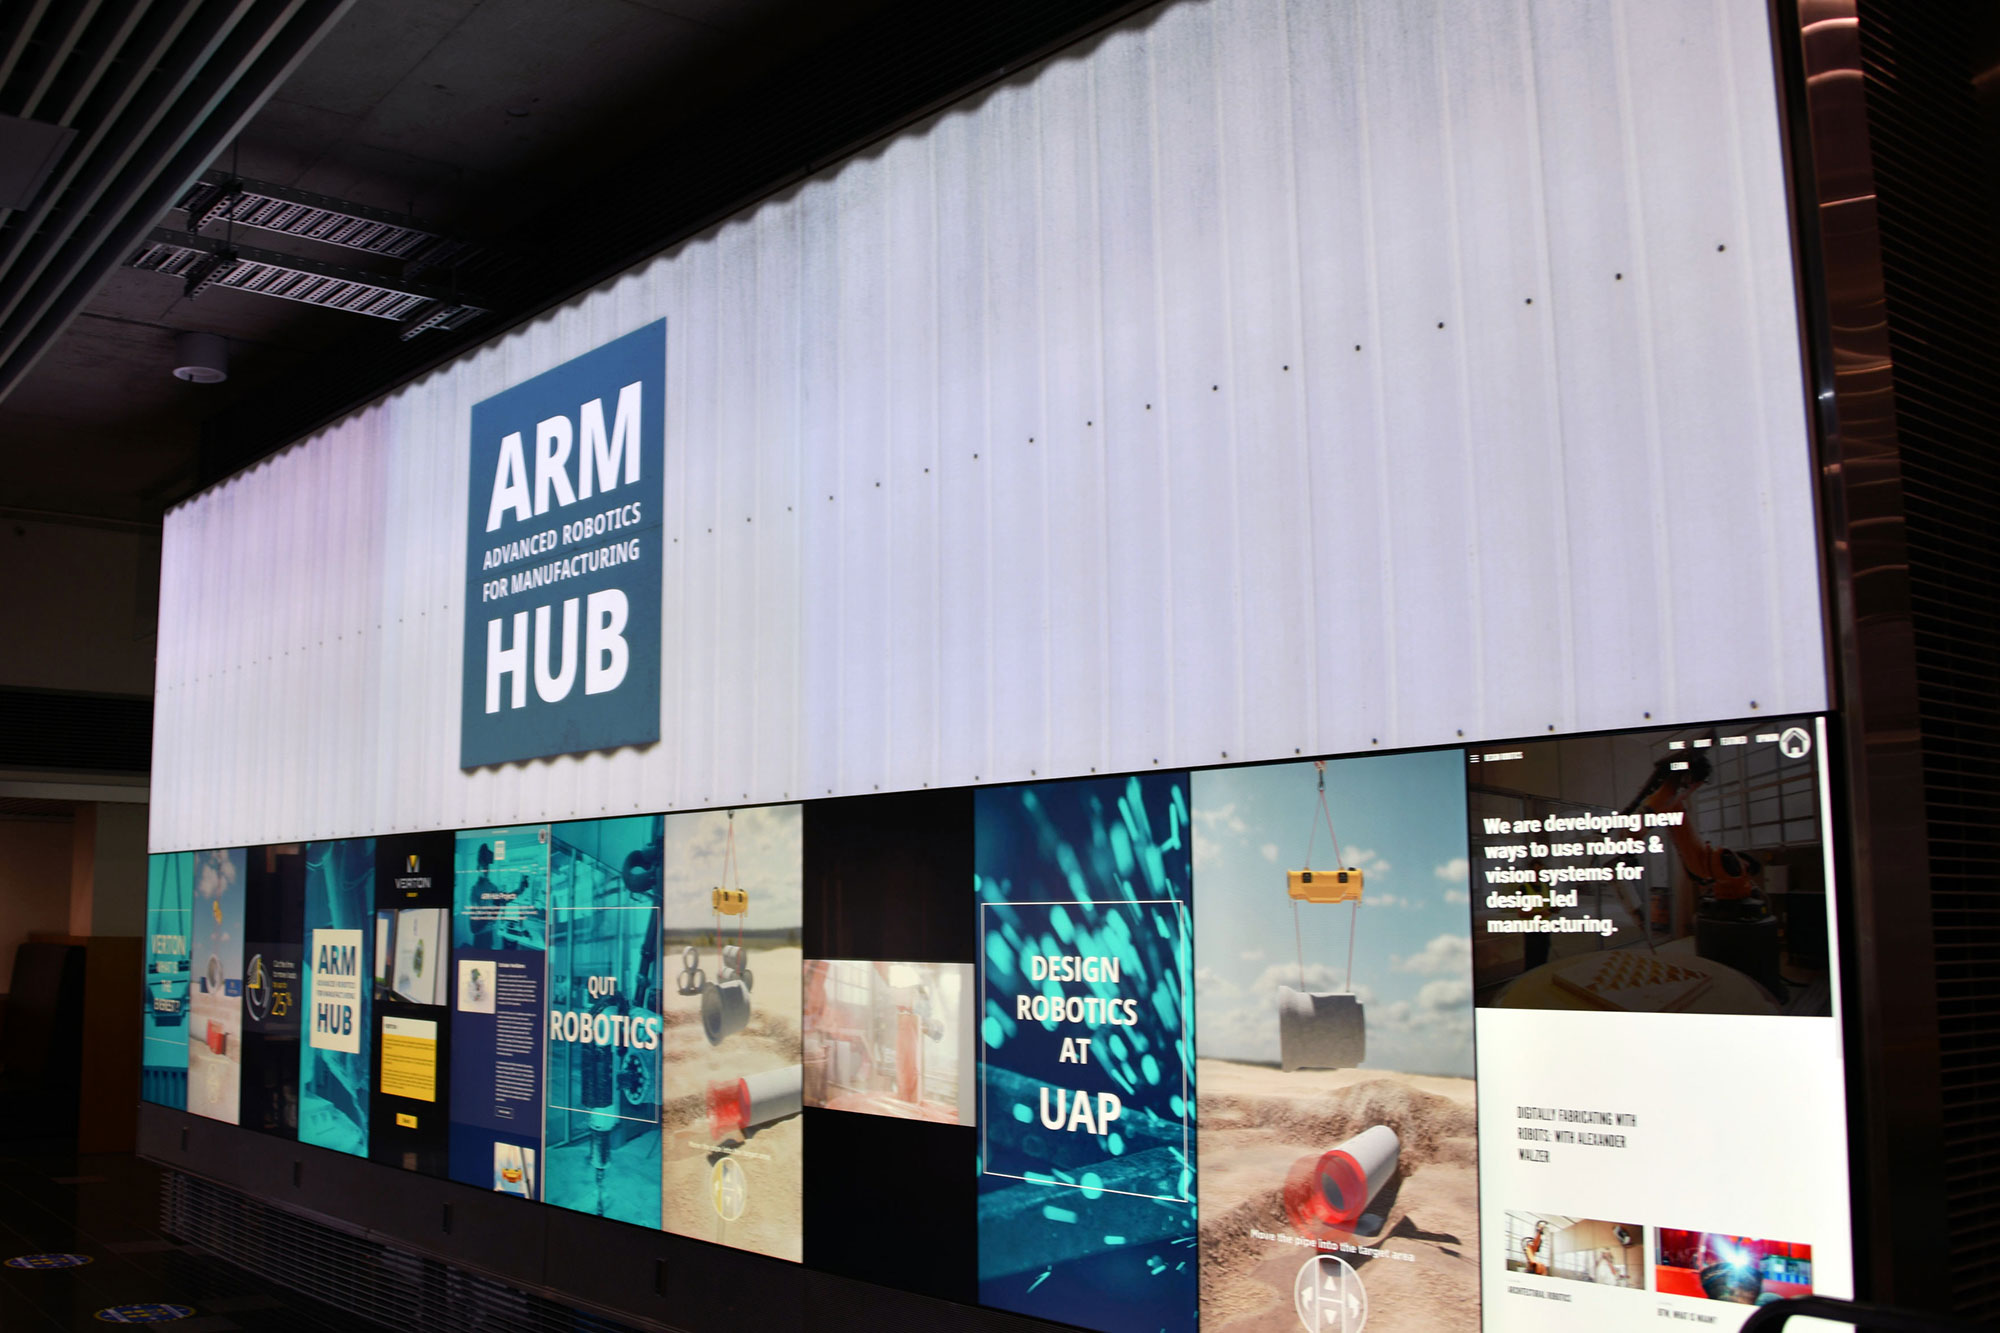 ARM hub showcase